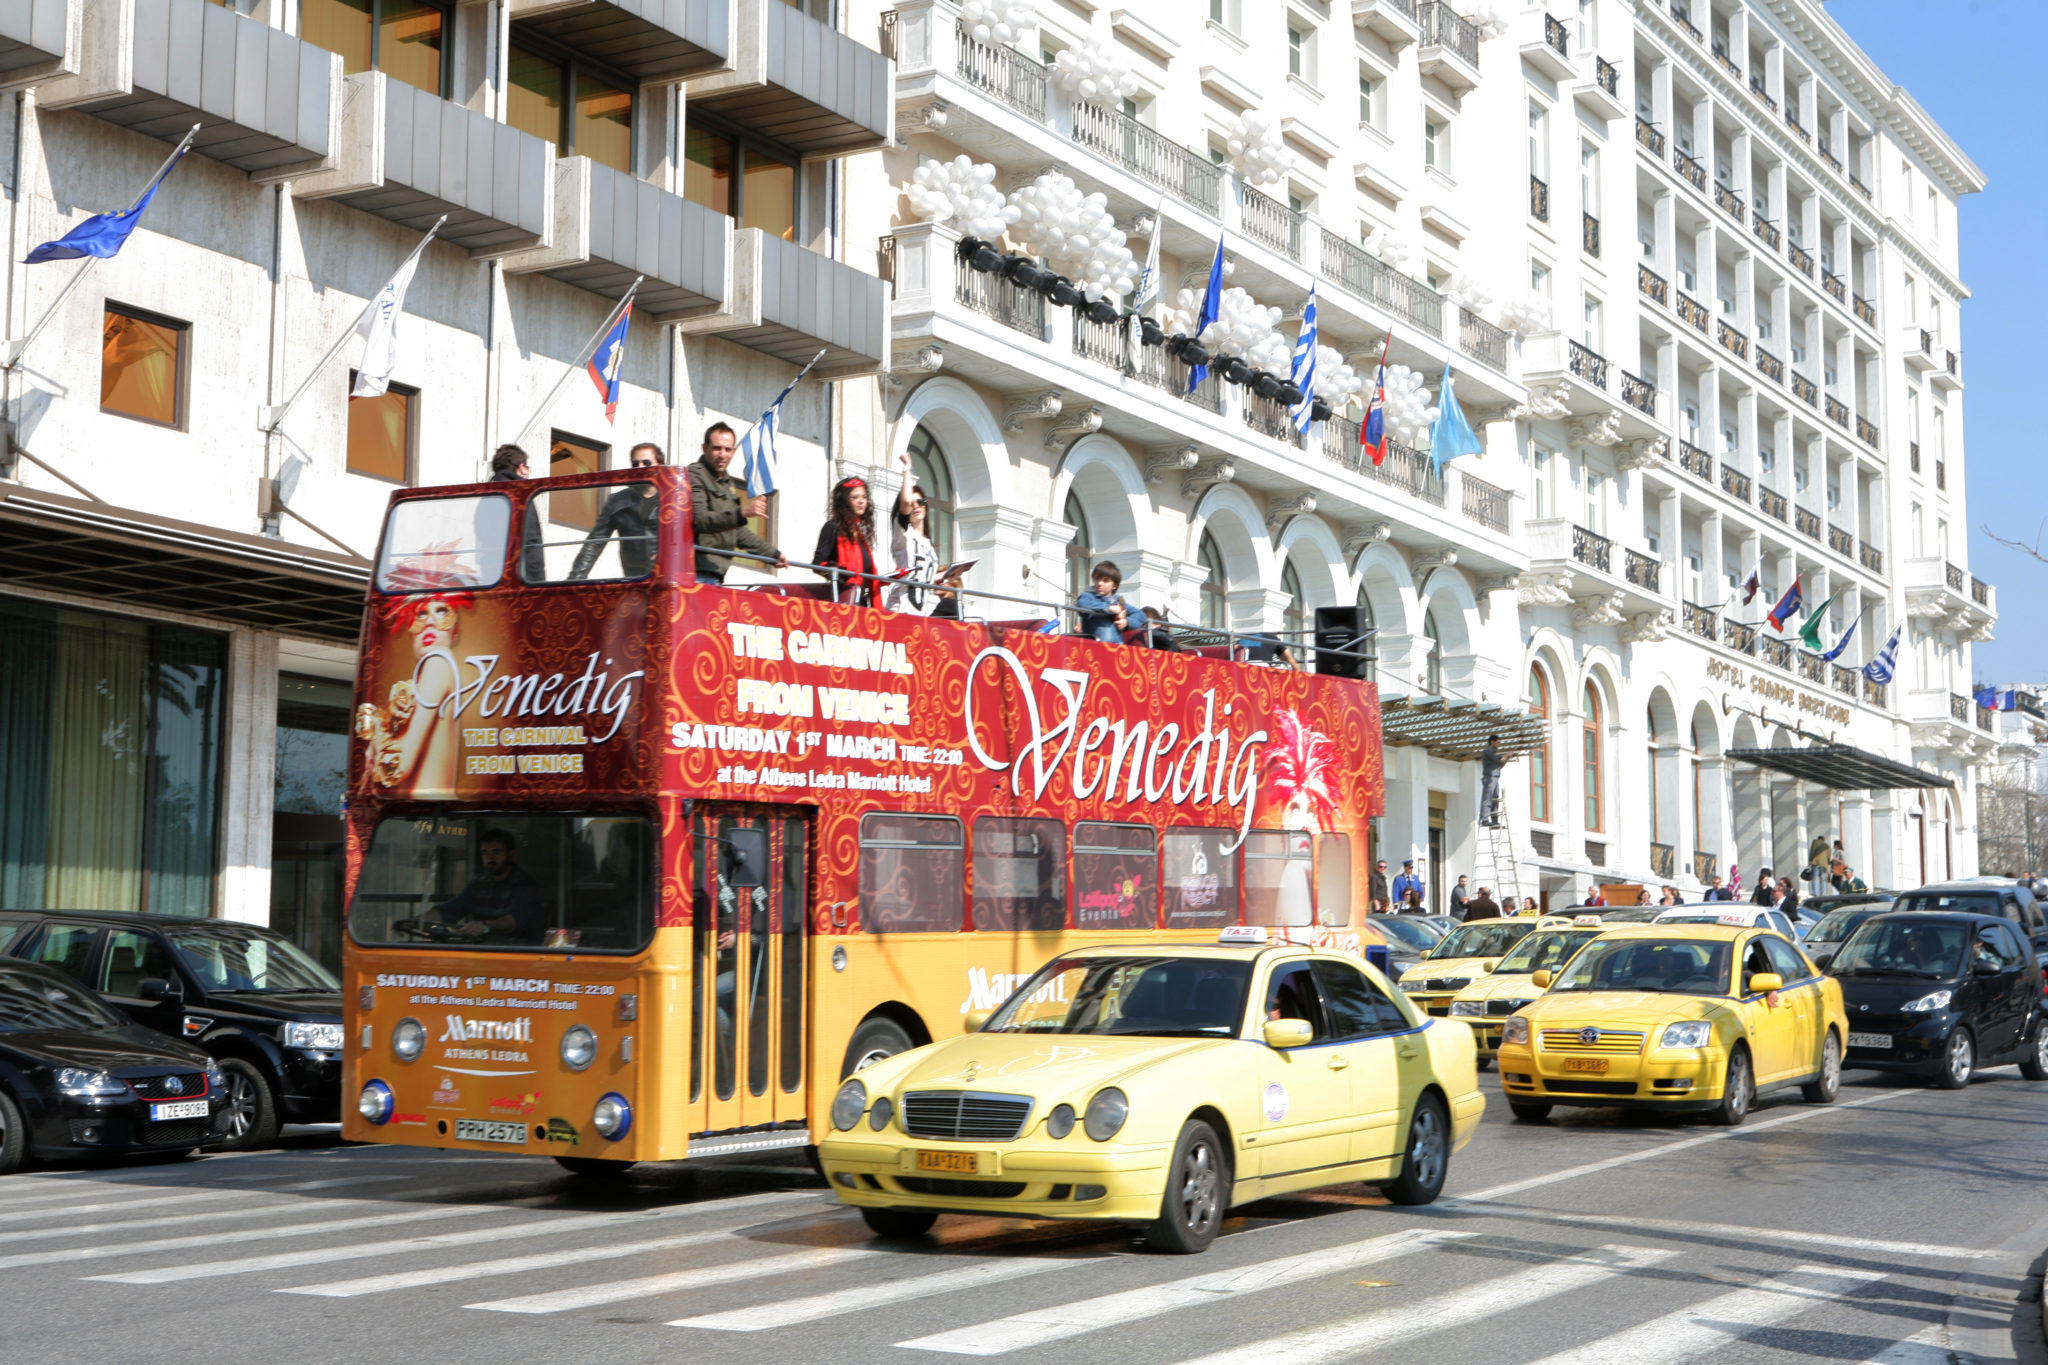 Venedig carnivan of venice roadshow with double decker bus | Custom Promotional Vehicles